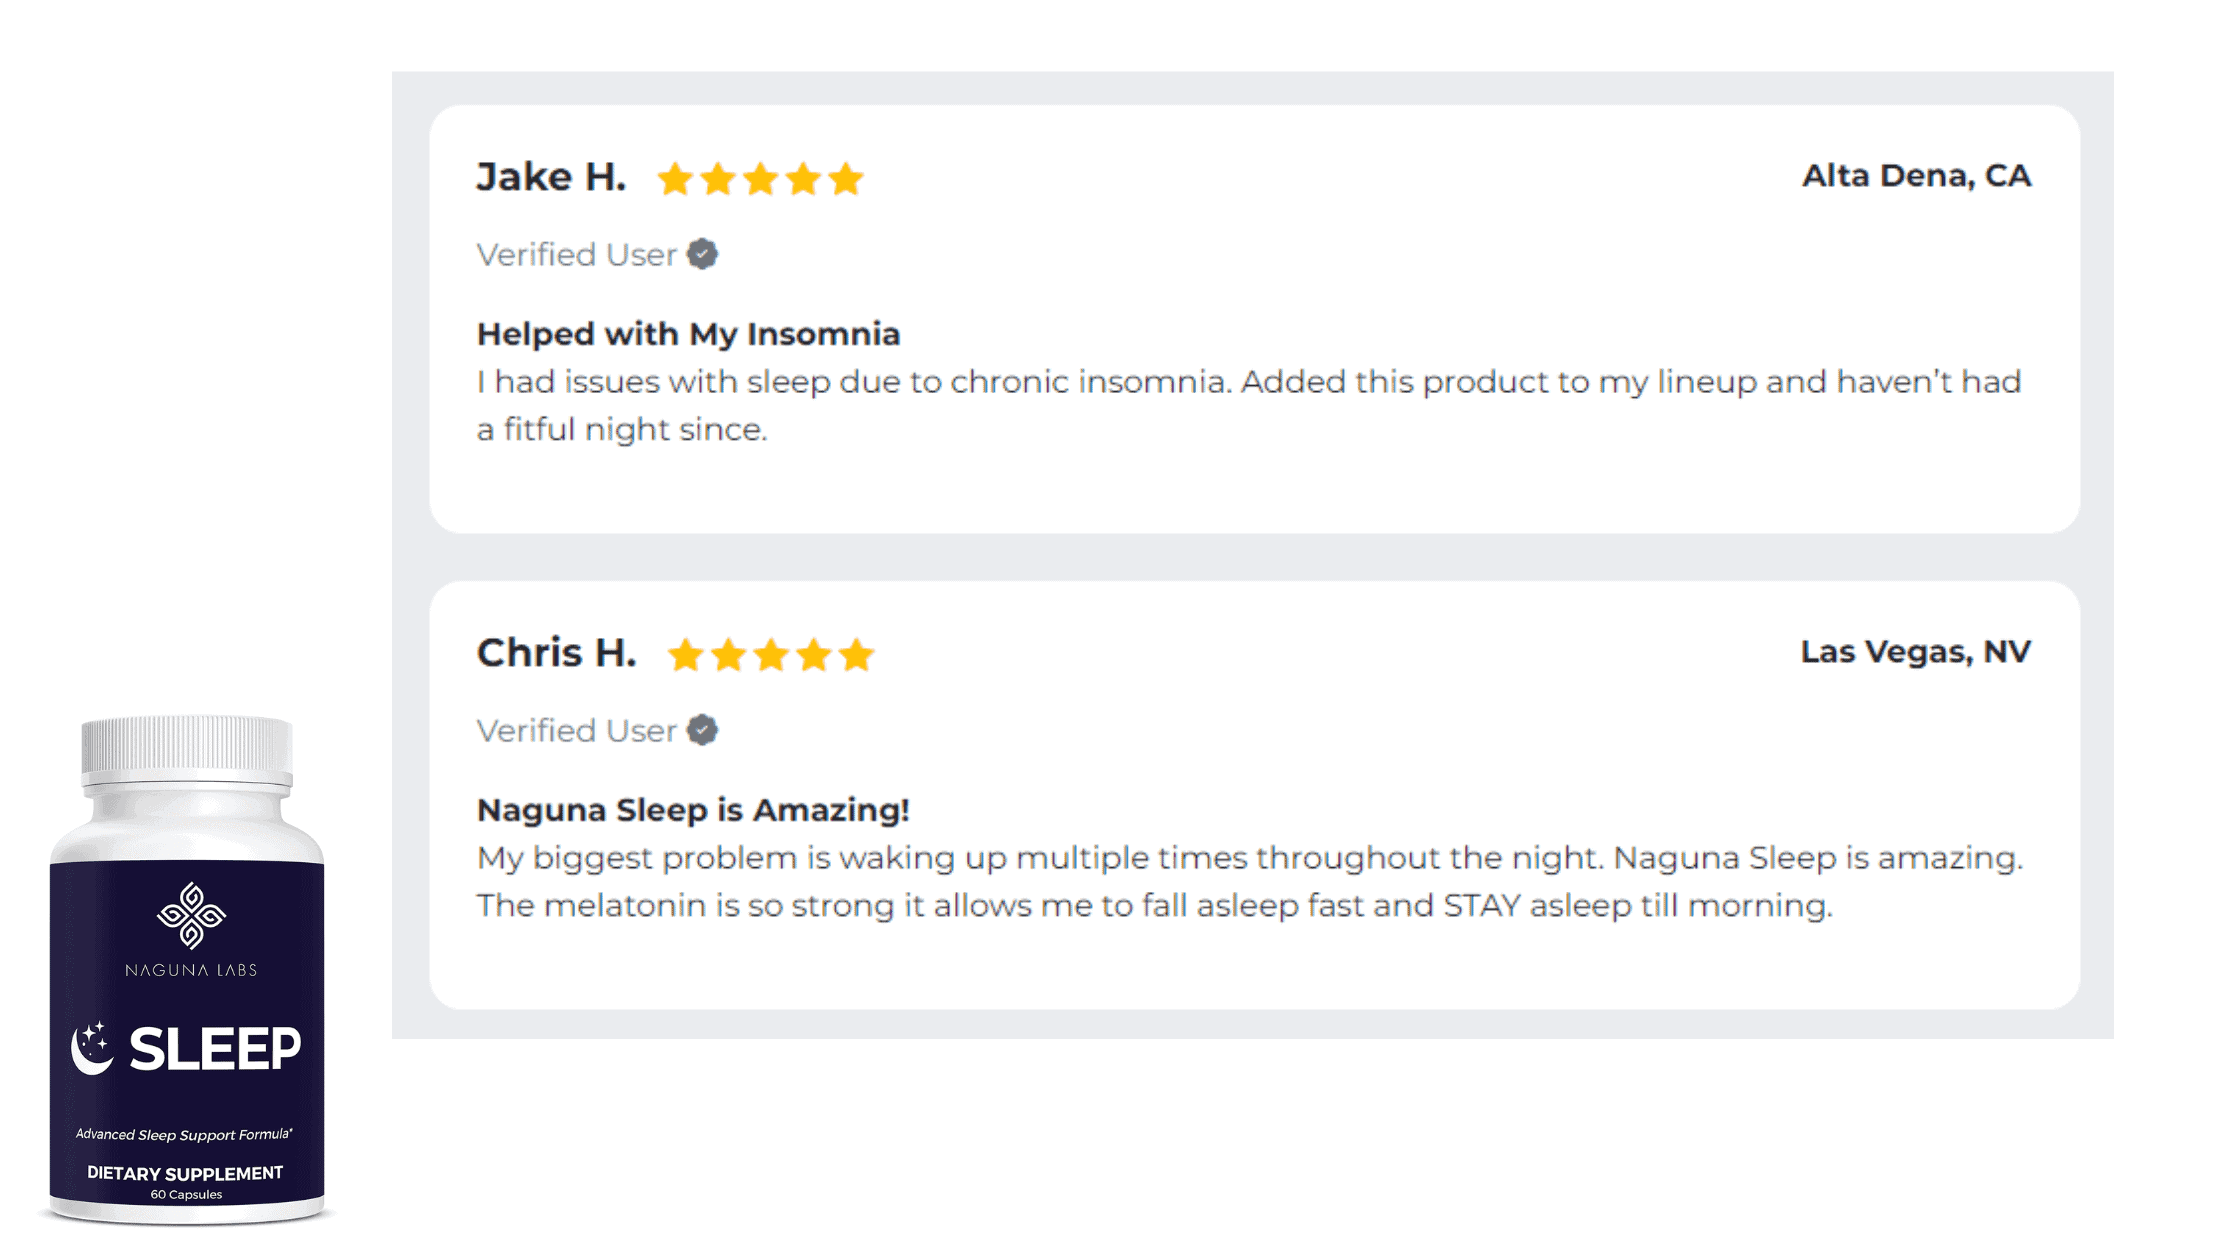 Naguna Sleep Customer Reviews